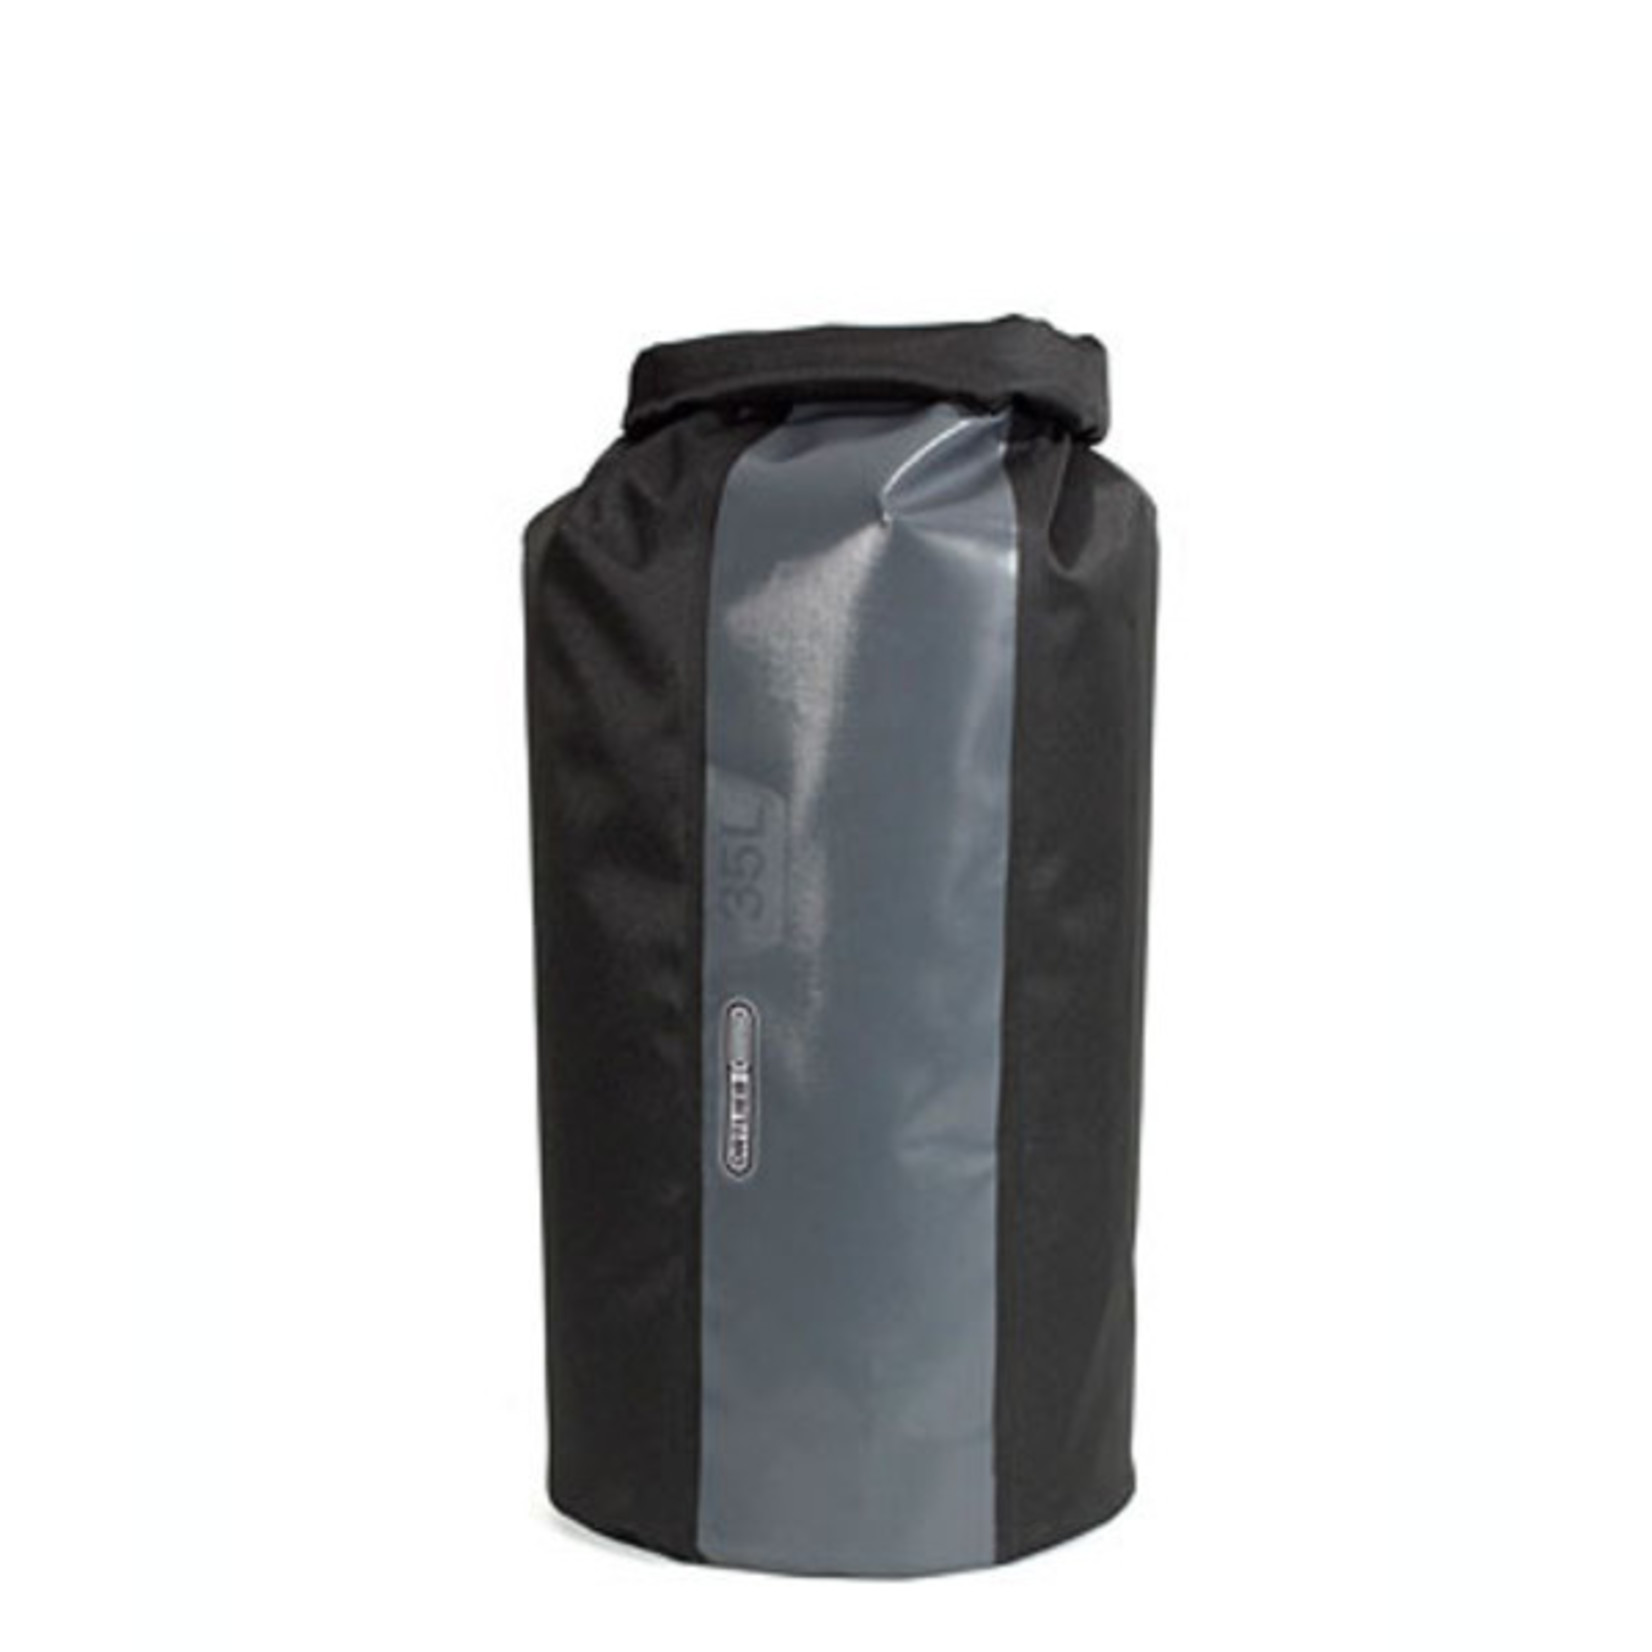 Ortlieb New Ortlieb PS 490 Dry Bag Strongest Heavy-Duty K5551 - 35L - Black-Grey